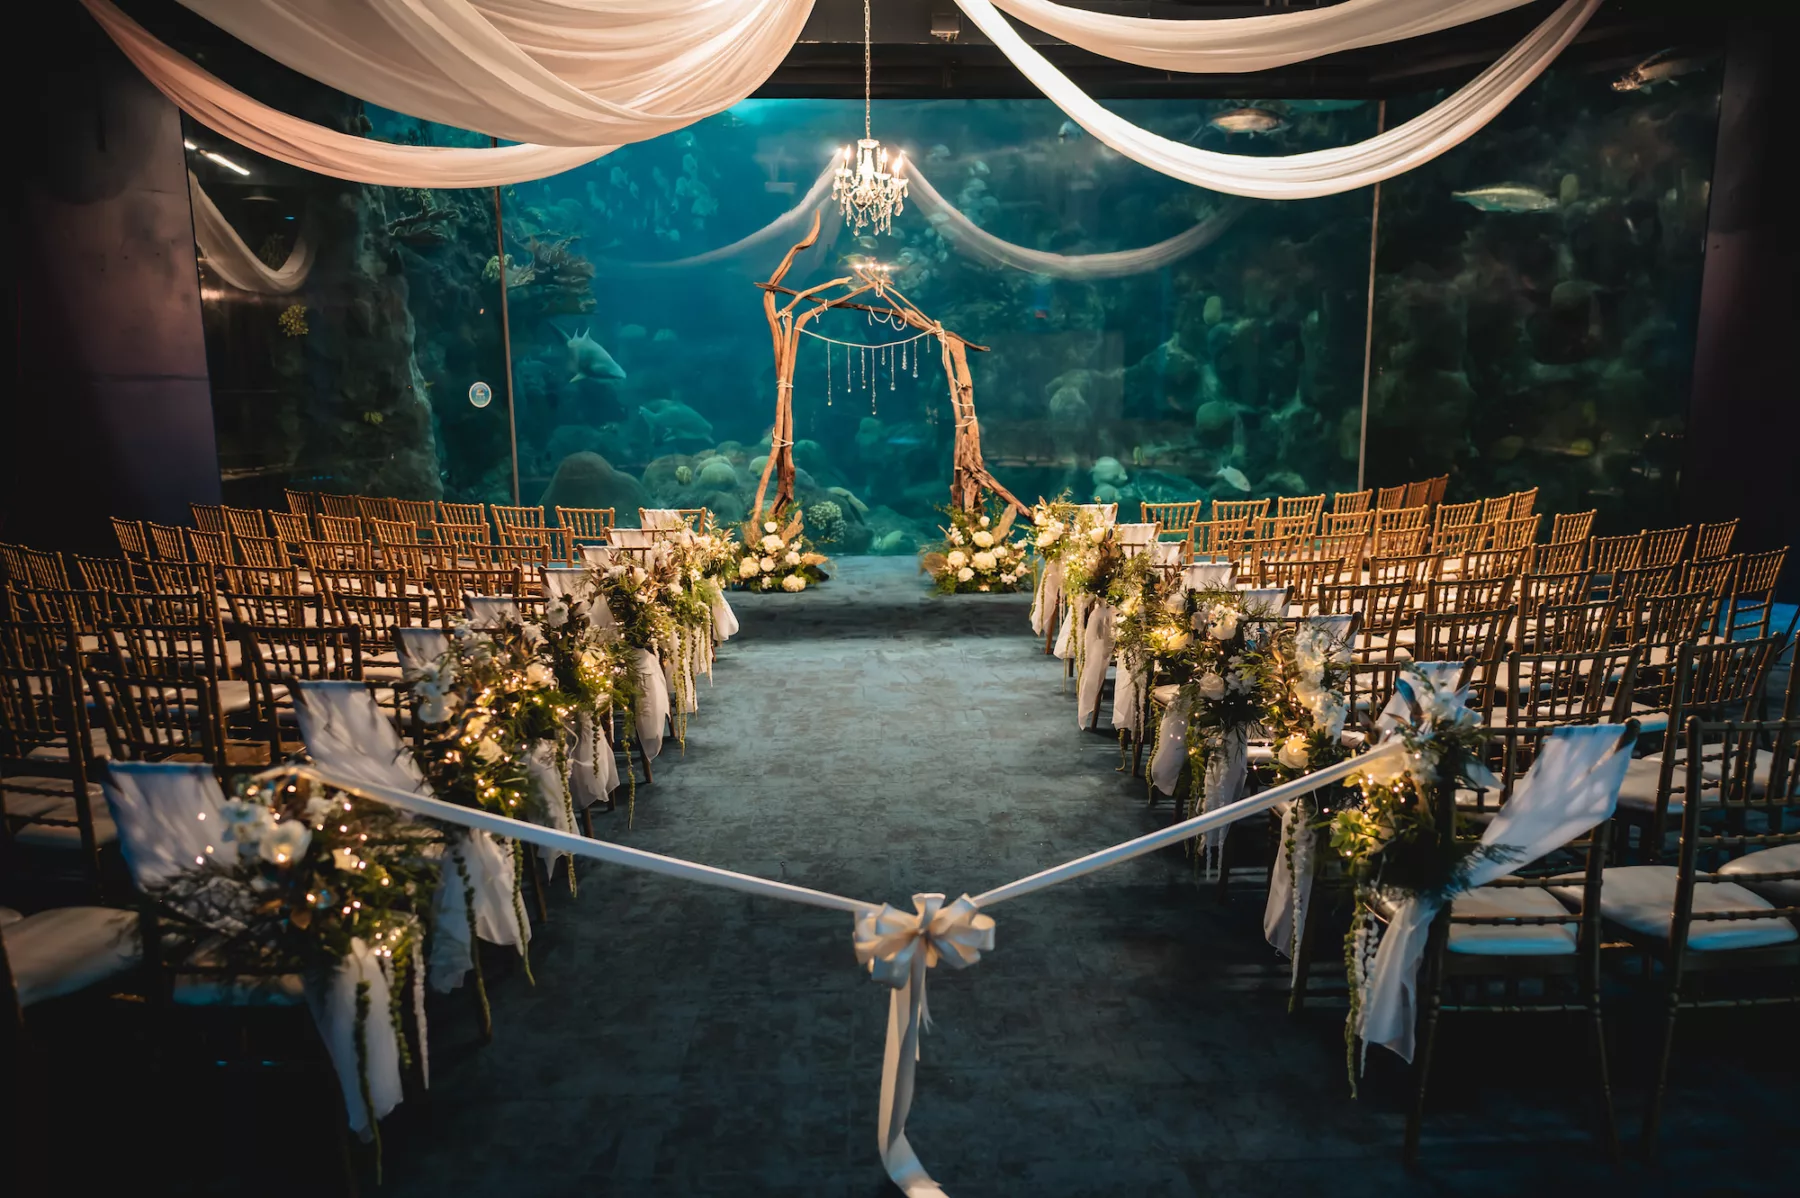 Nautical Inspired Coral Reef Gallery Fall Wedding Ceremony Decor Ideas | Gold Chiavari Chairs | Tampa Bay Event Venue The Florida Aquarium | Planner Breezin Weddings | Florist Lemon Drops | Outside The Box Event Rentals